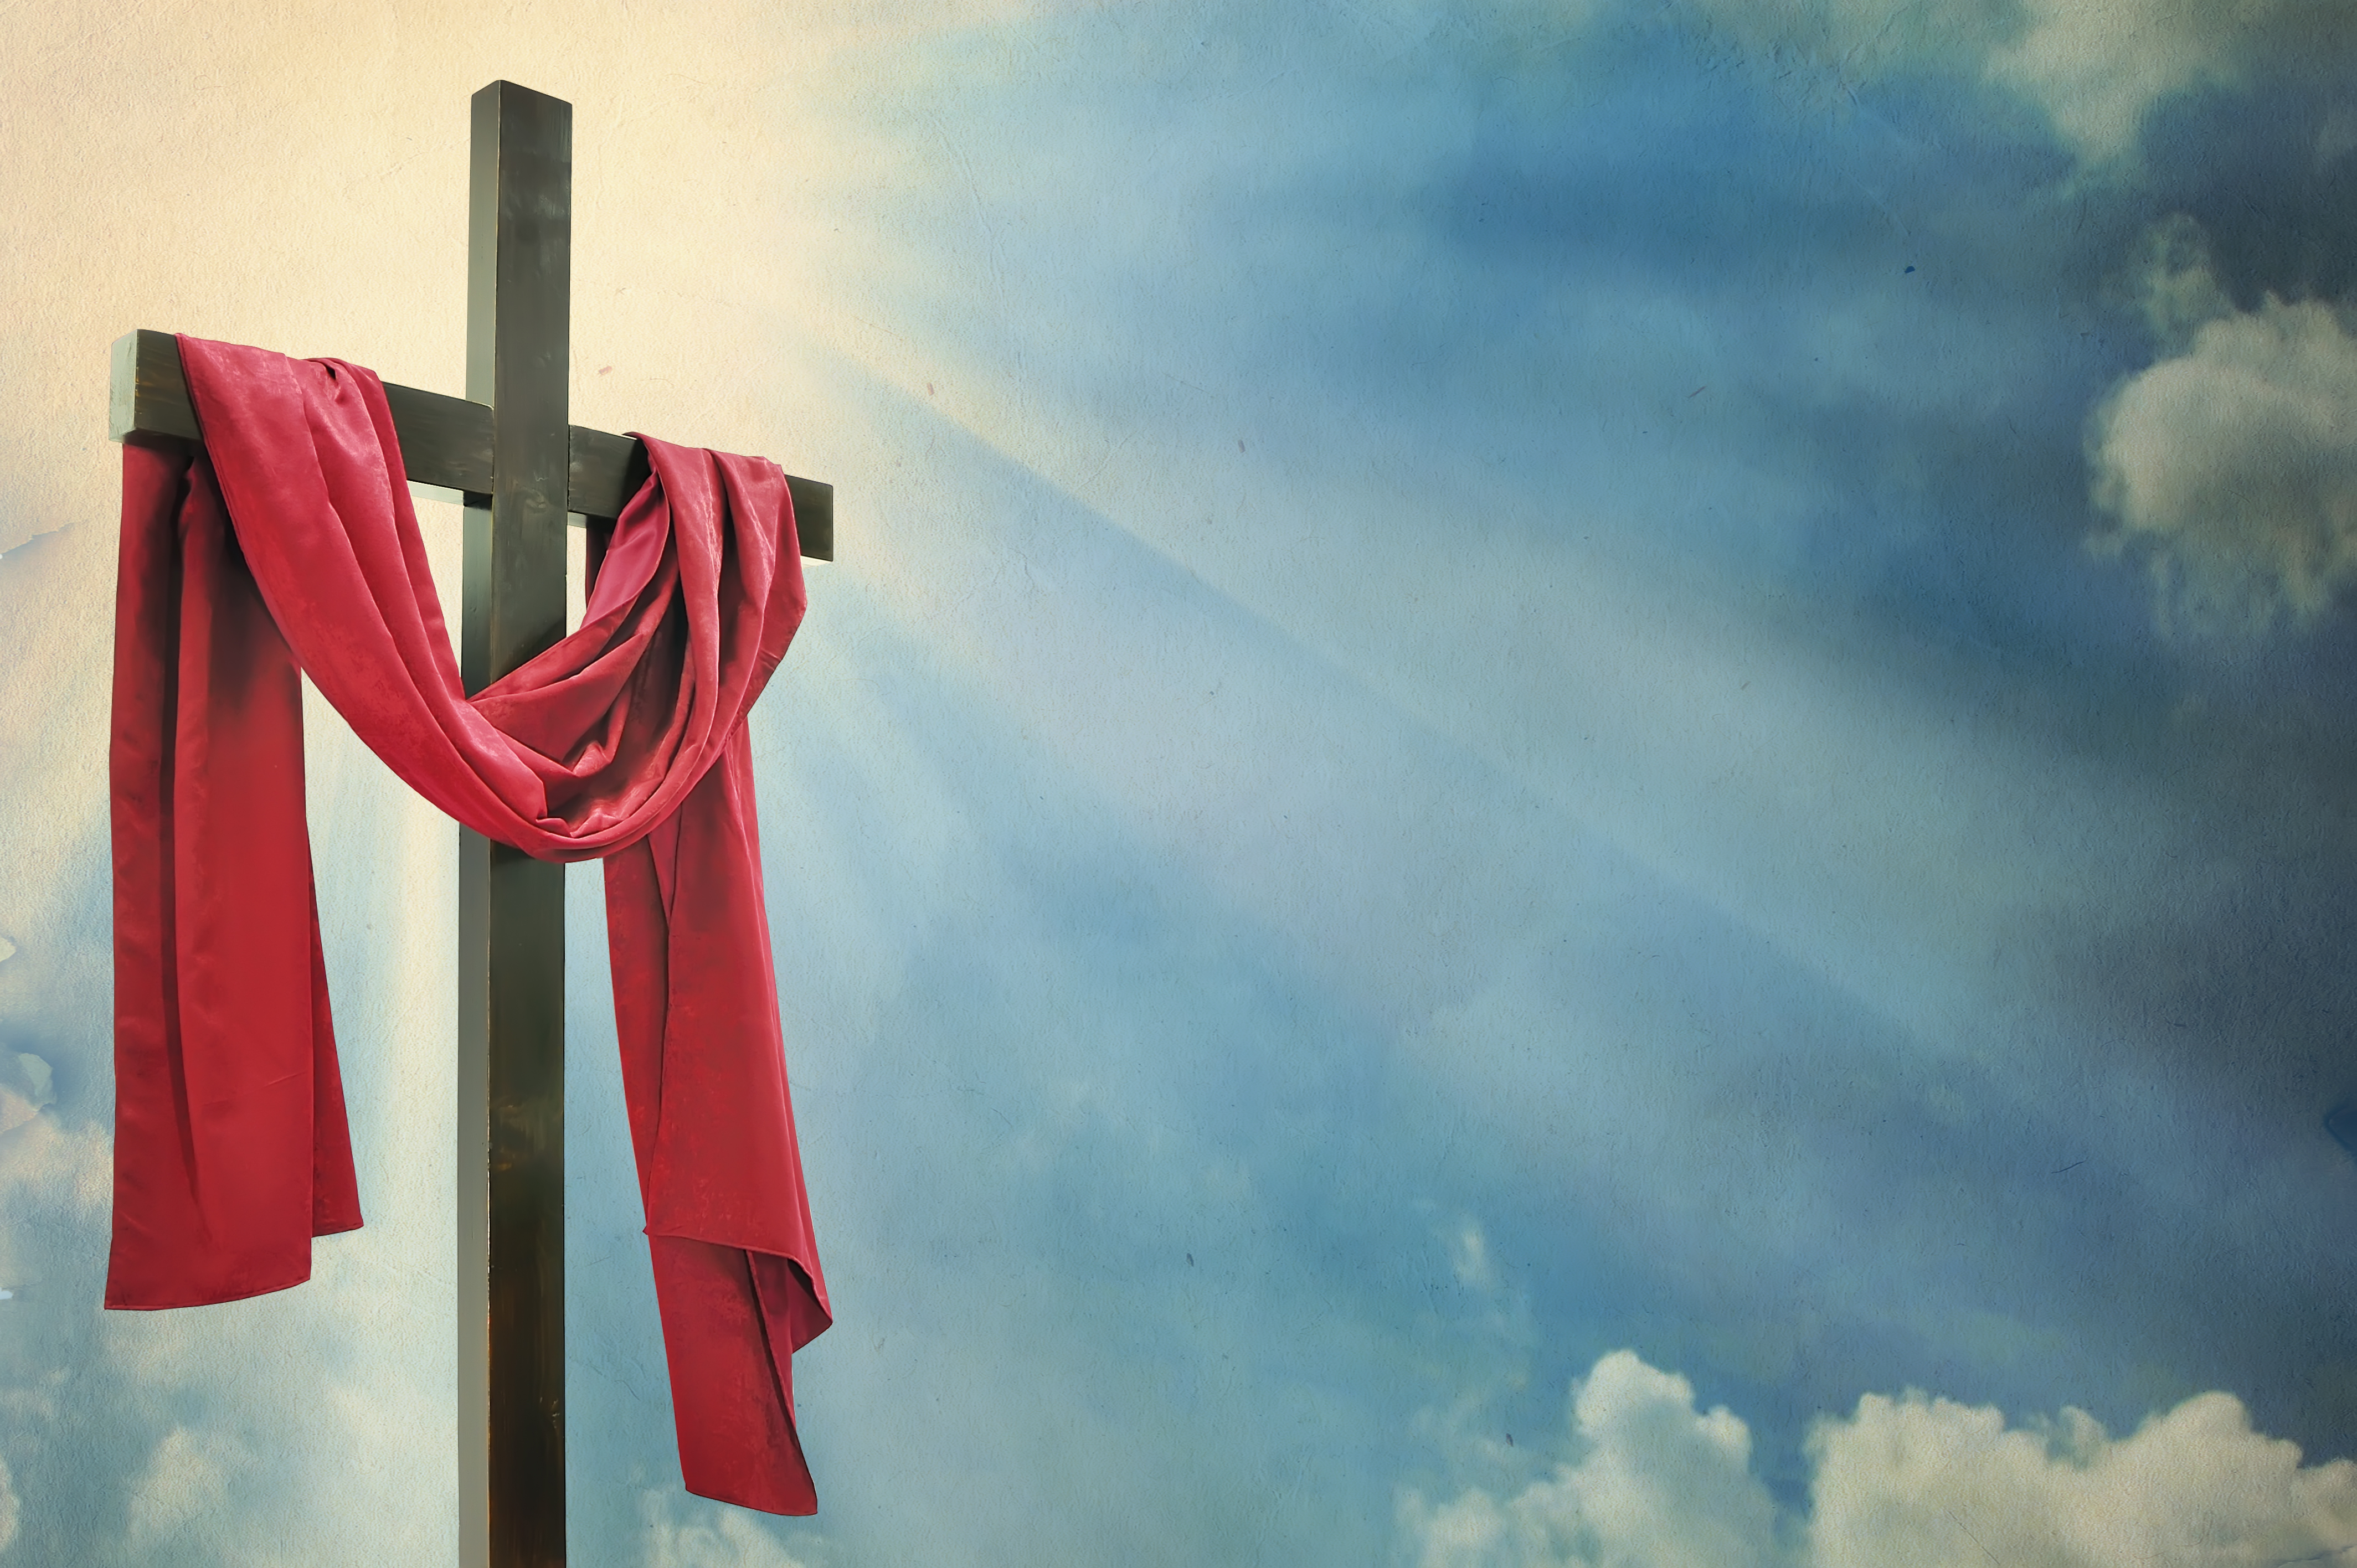 Chrystus zmartwychwstał Alleluja! - Caritas Polska